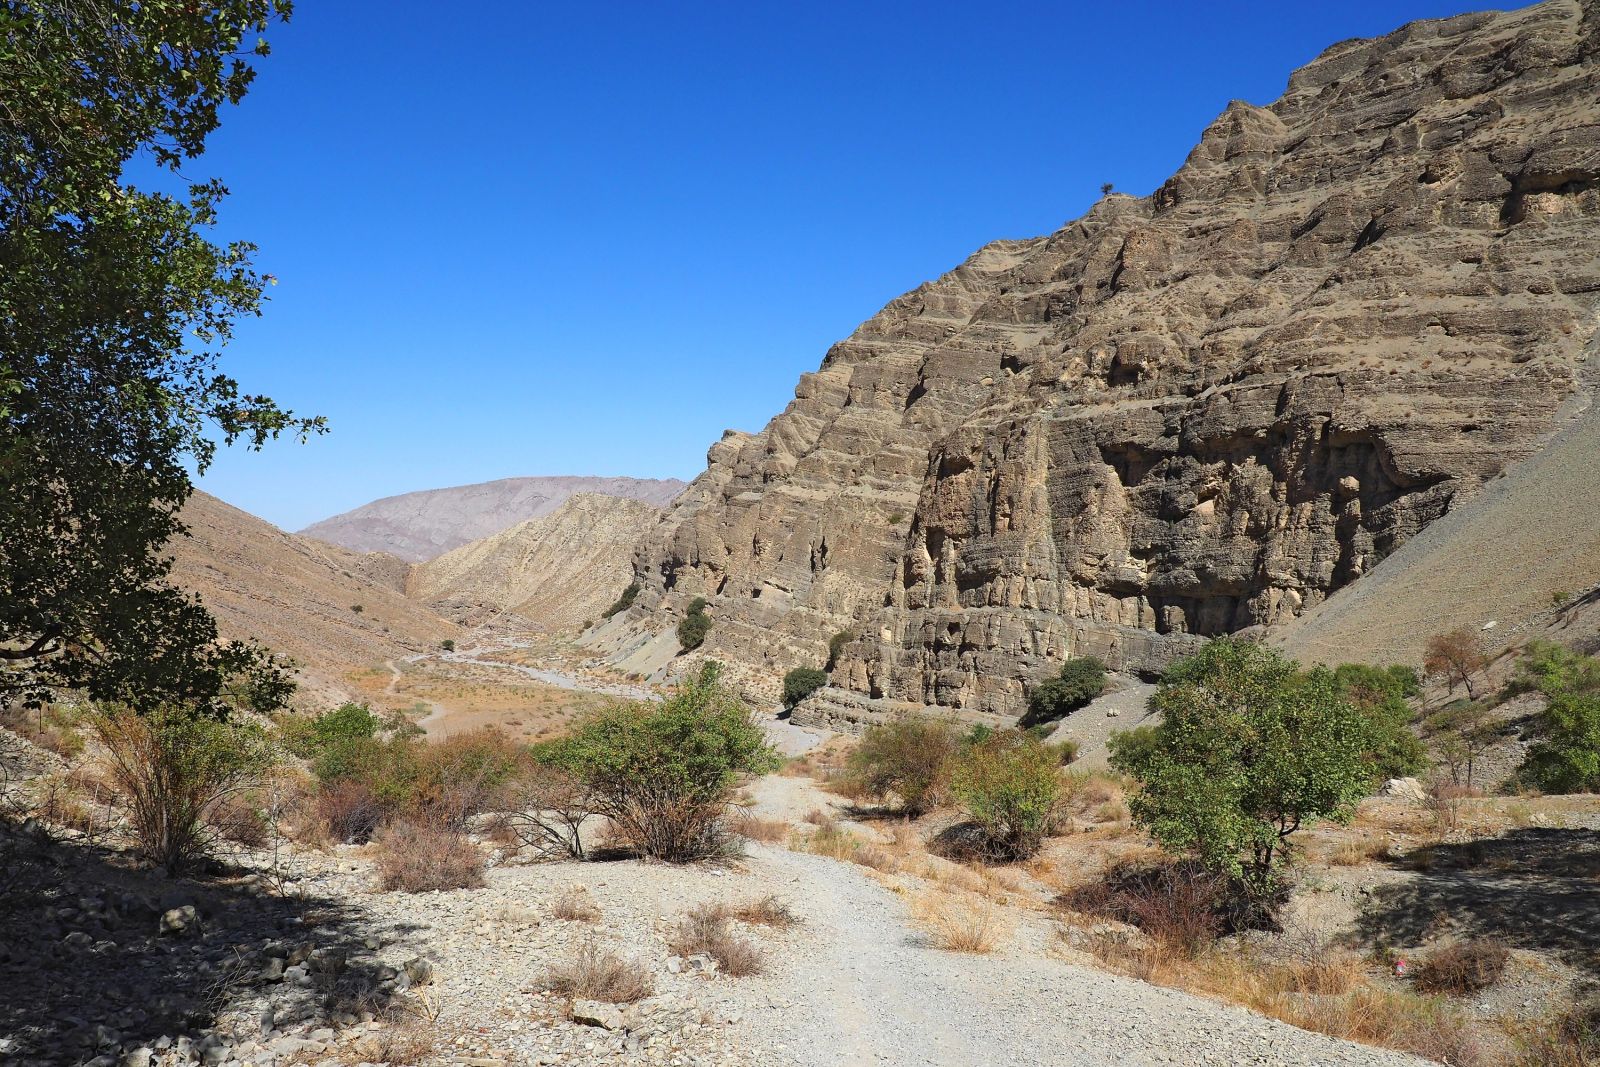 Wanderung durch Chuli Canyon in den Kopedag Bergen